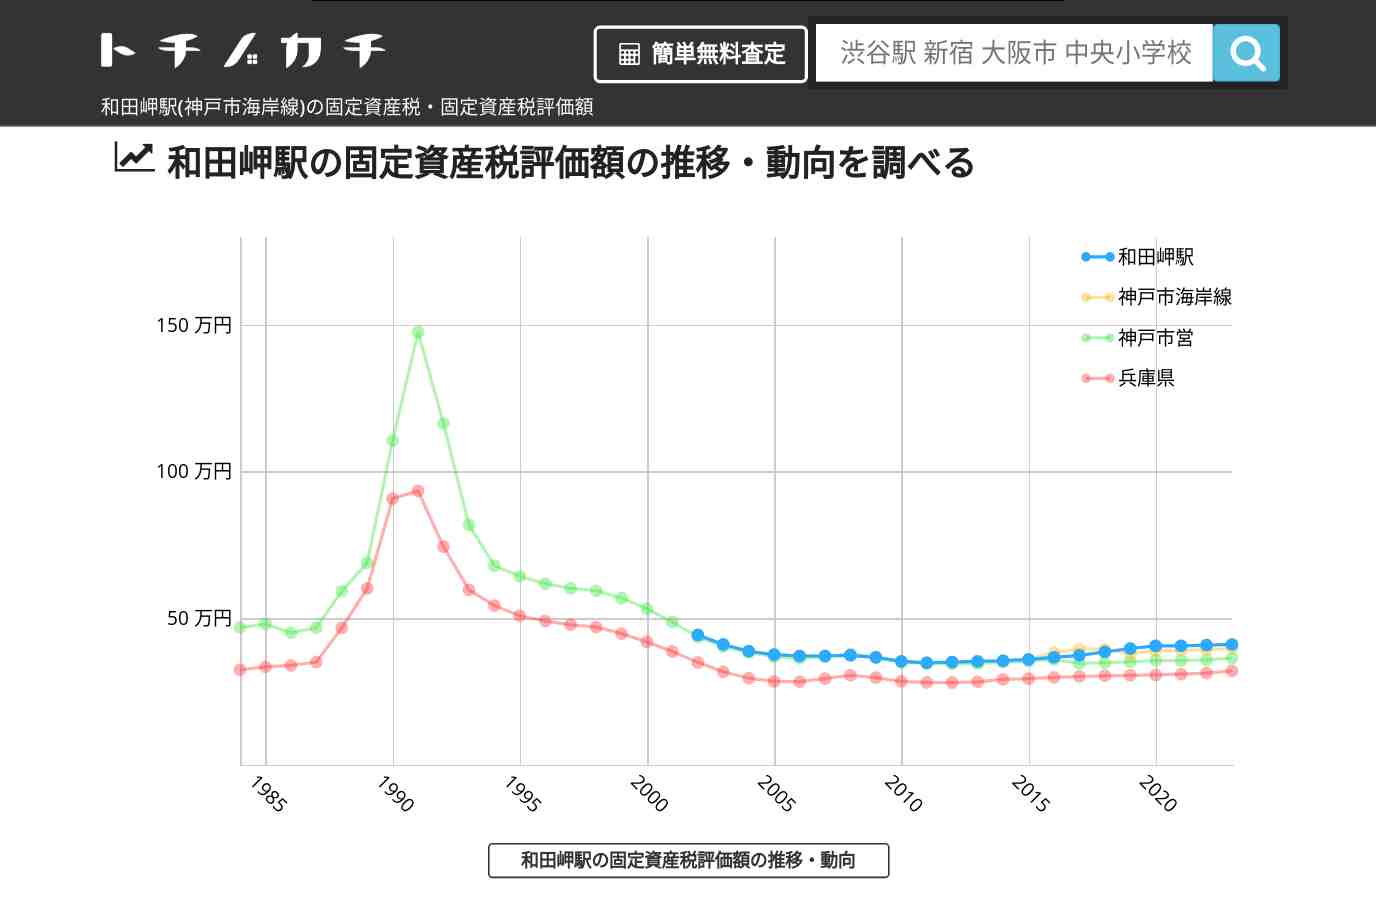 和田岬駅(神戸市海岸線)の固定資産税・固定資産税評価額 | トチノカチ